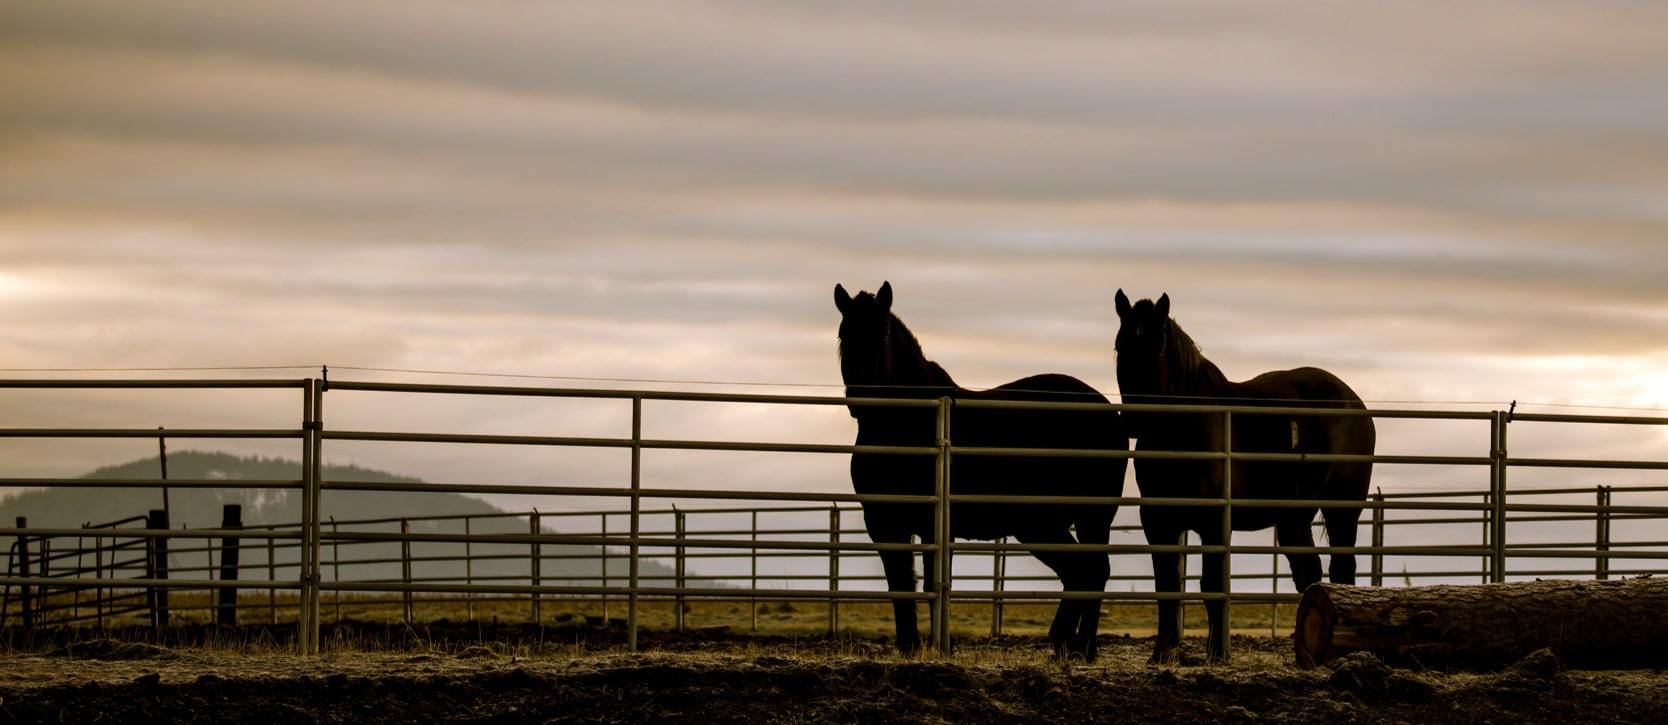 Horses on a farm in the Rathdrum prairie